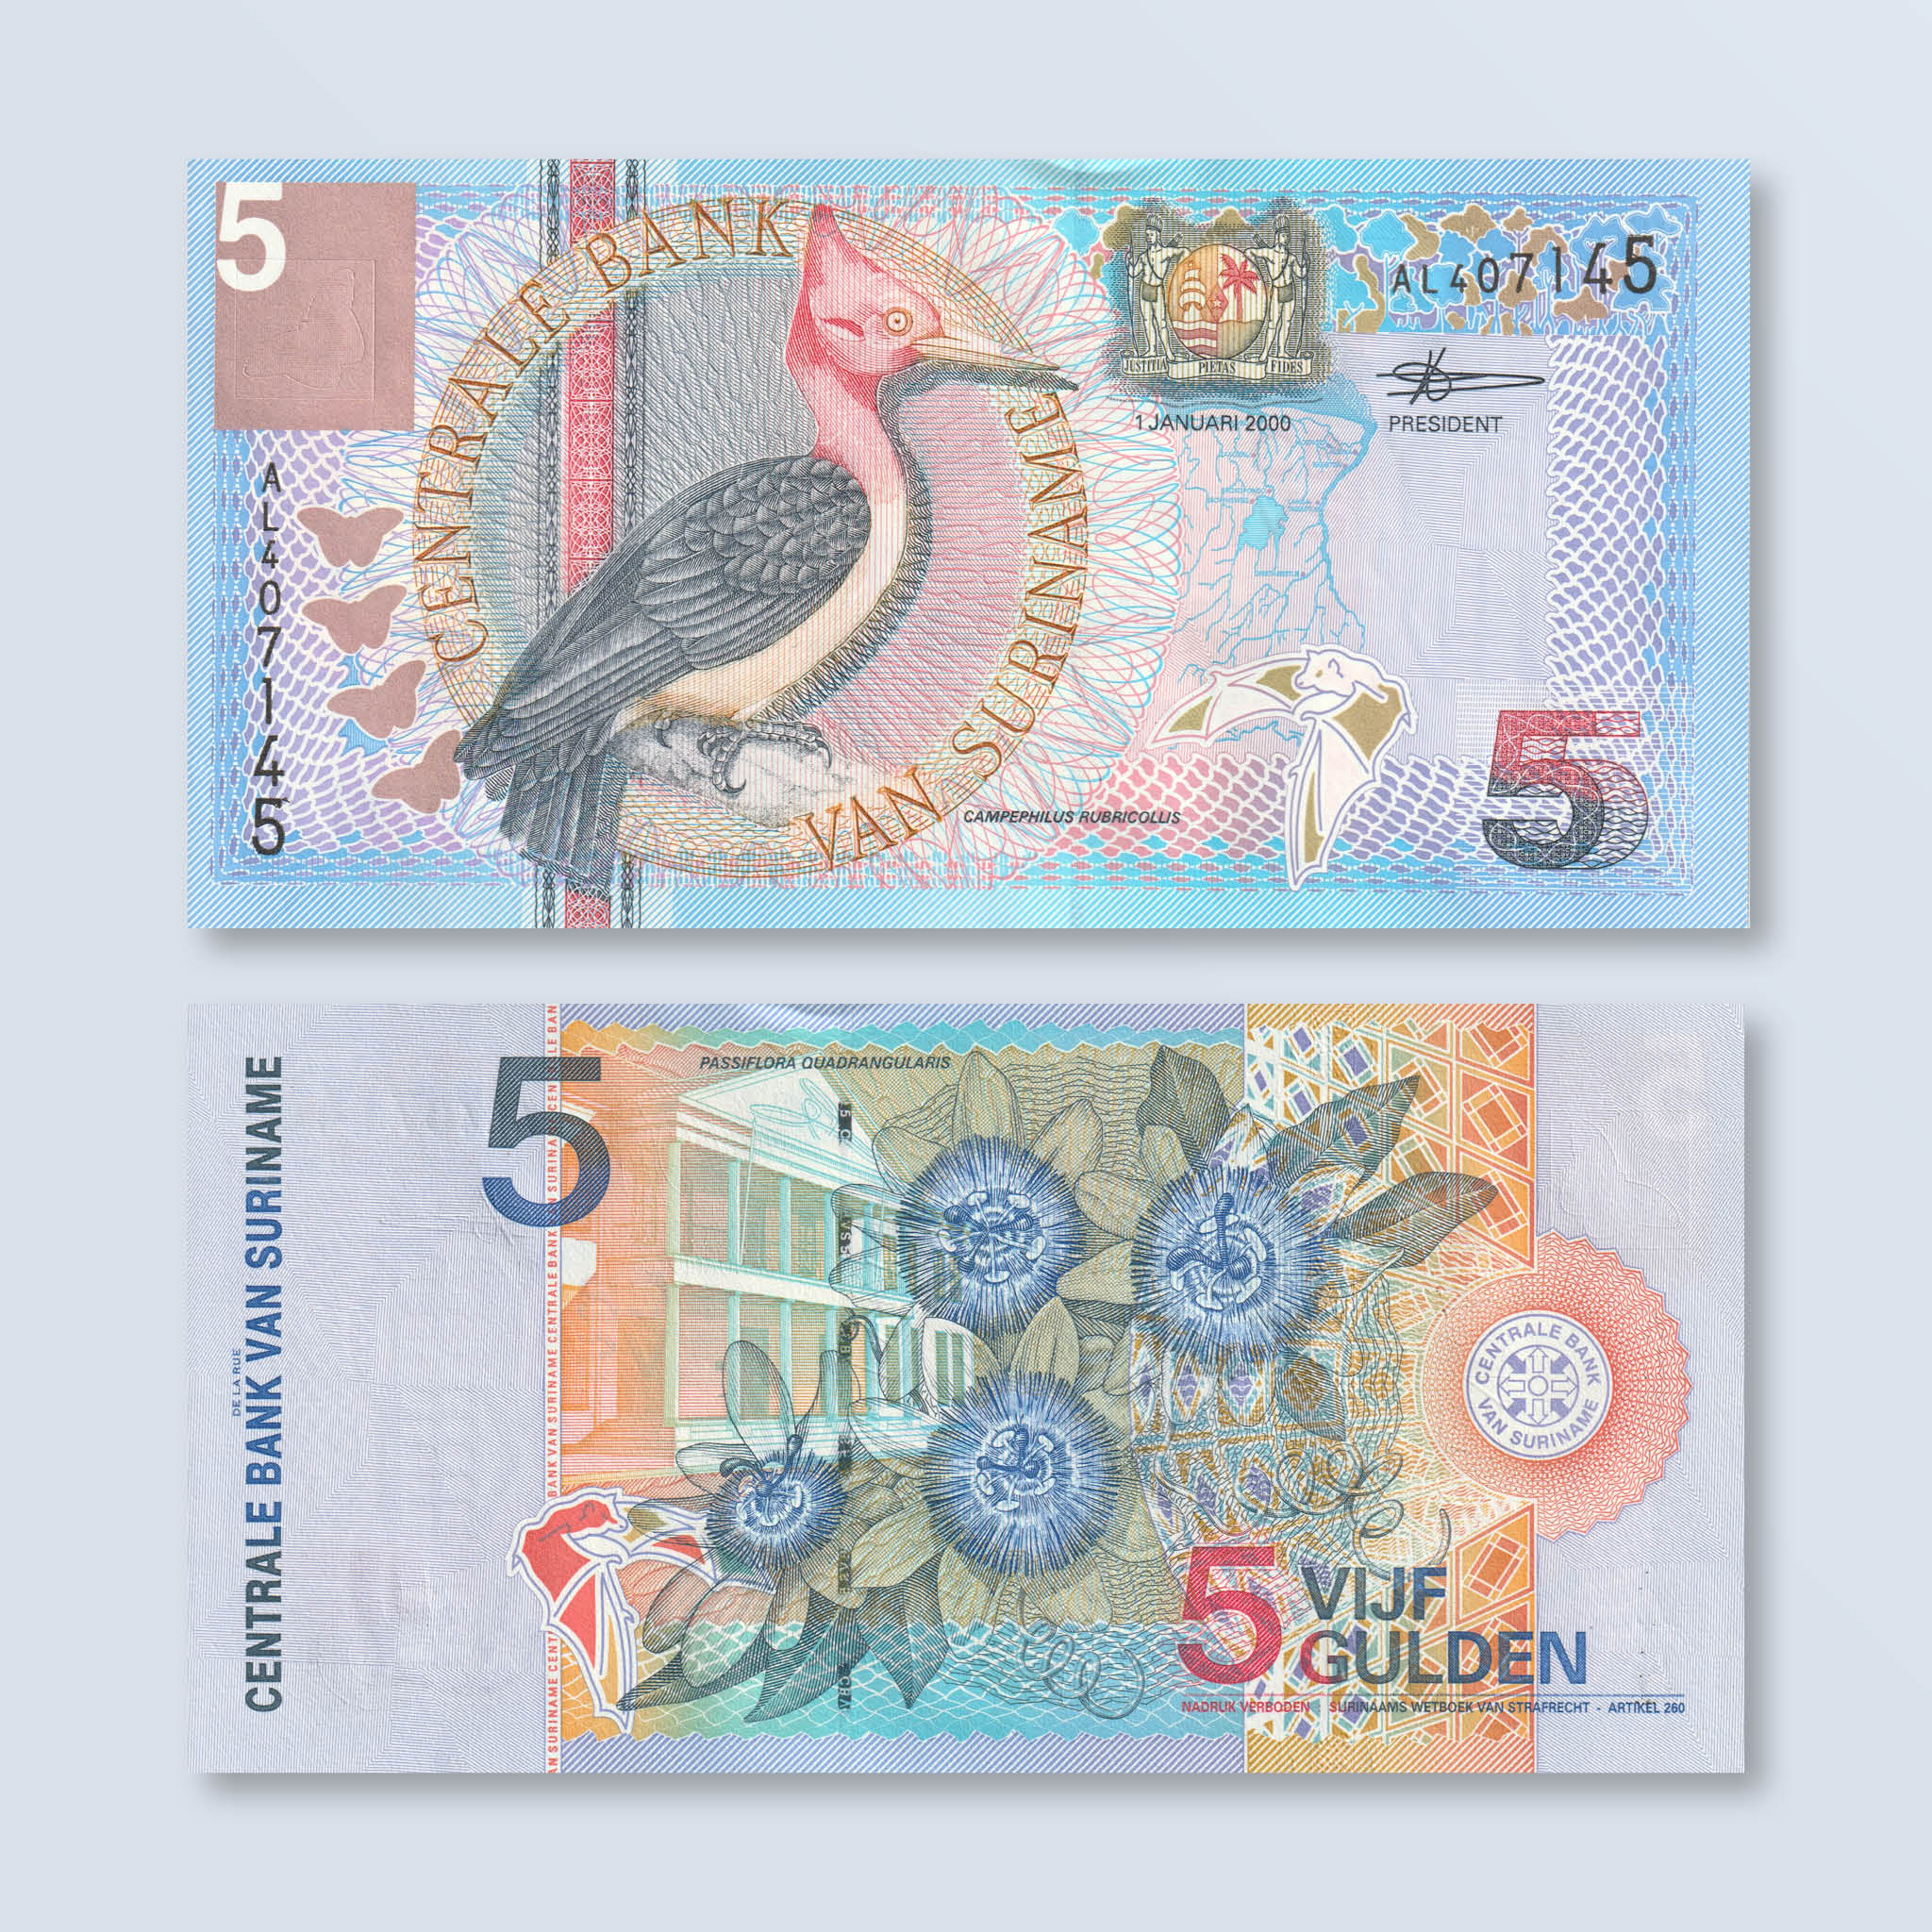 Suriname 5 Gulden, 2000, B531a, P146, UNC - Robert's World Money - World Banknotes